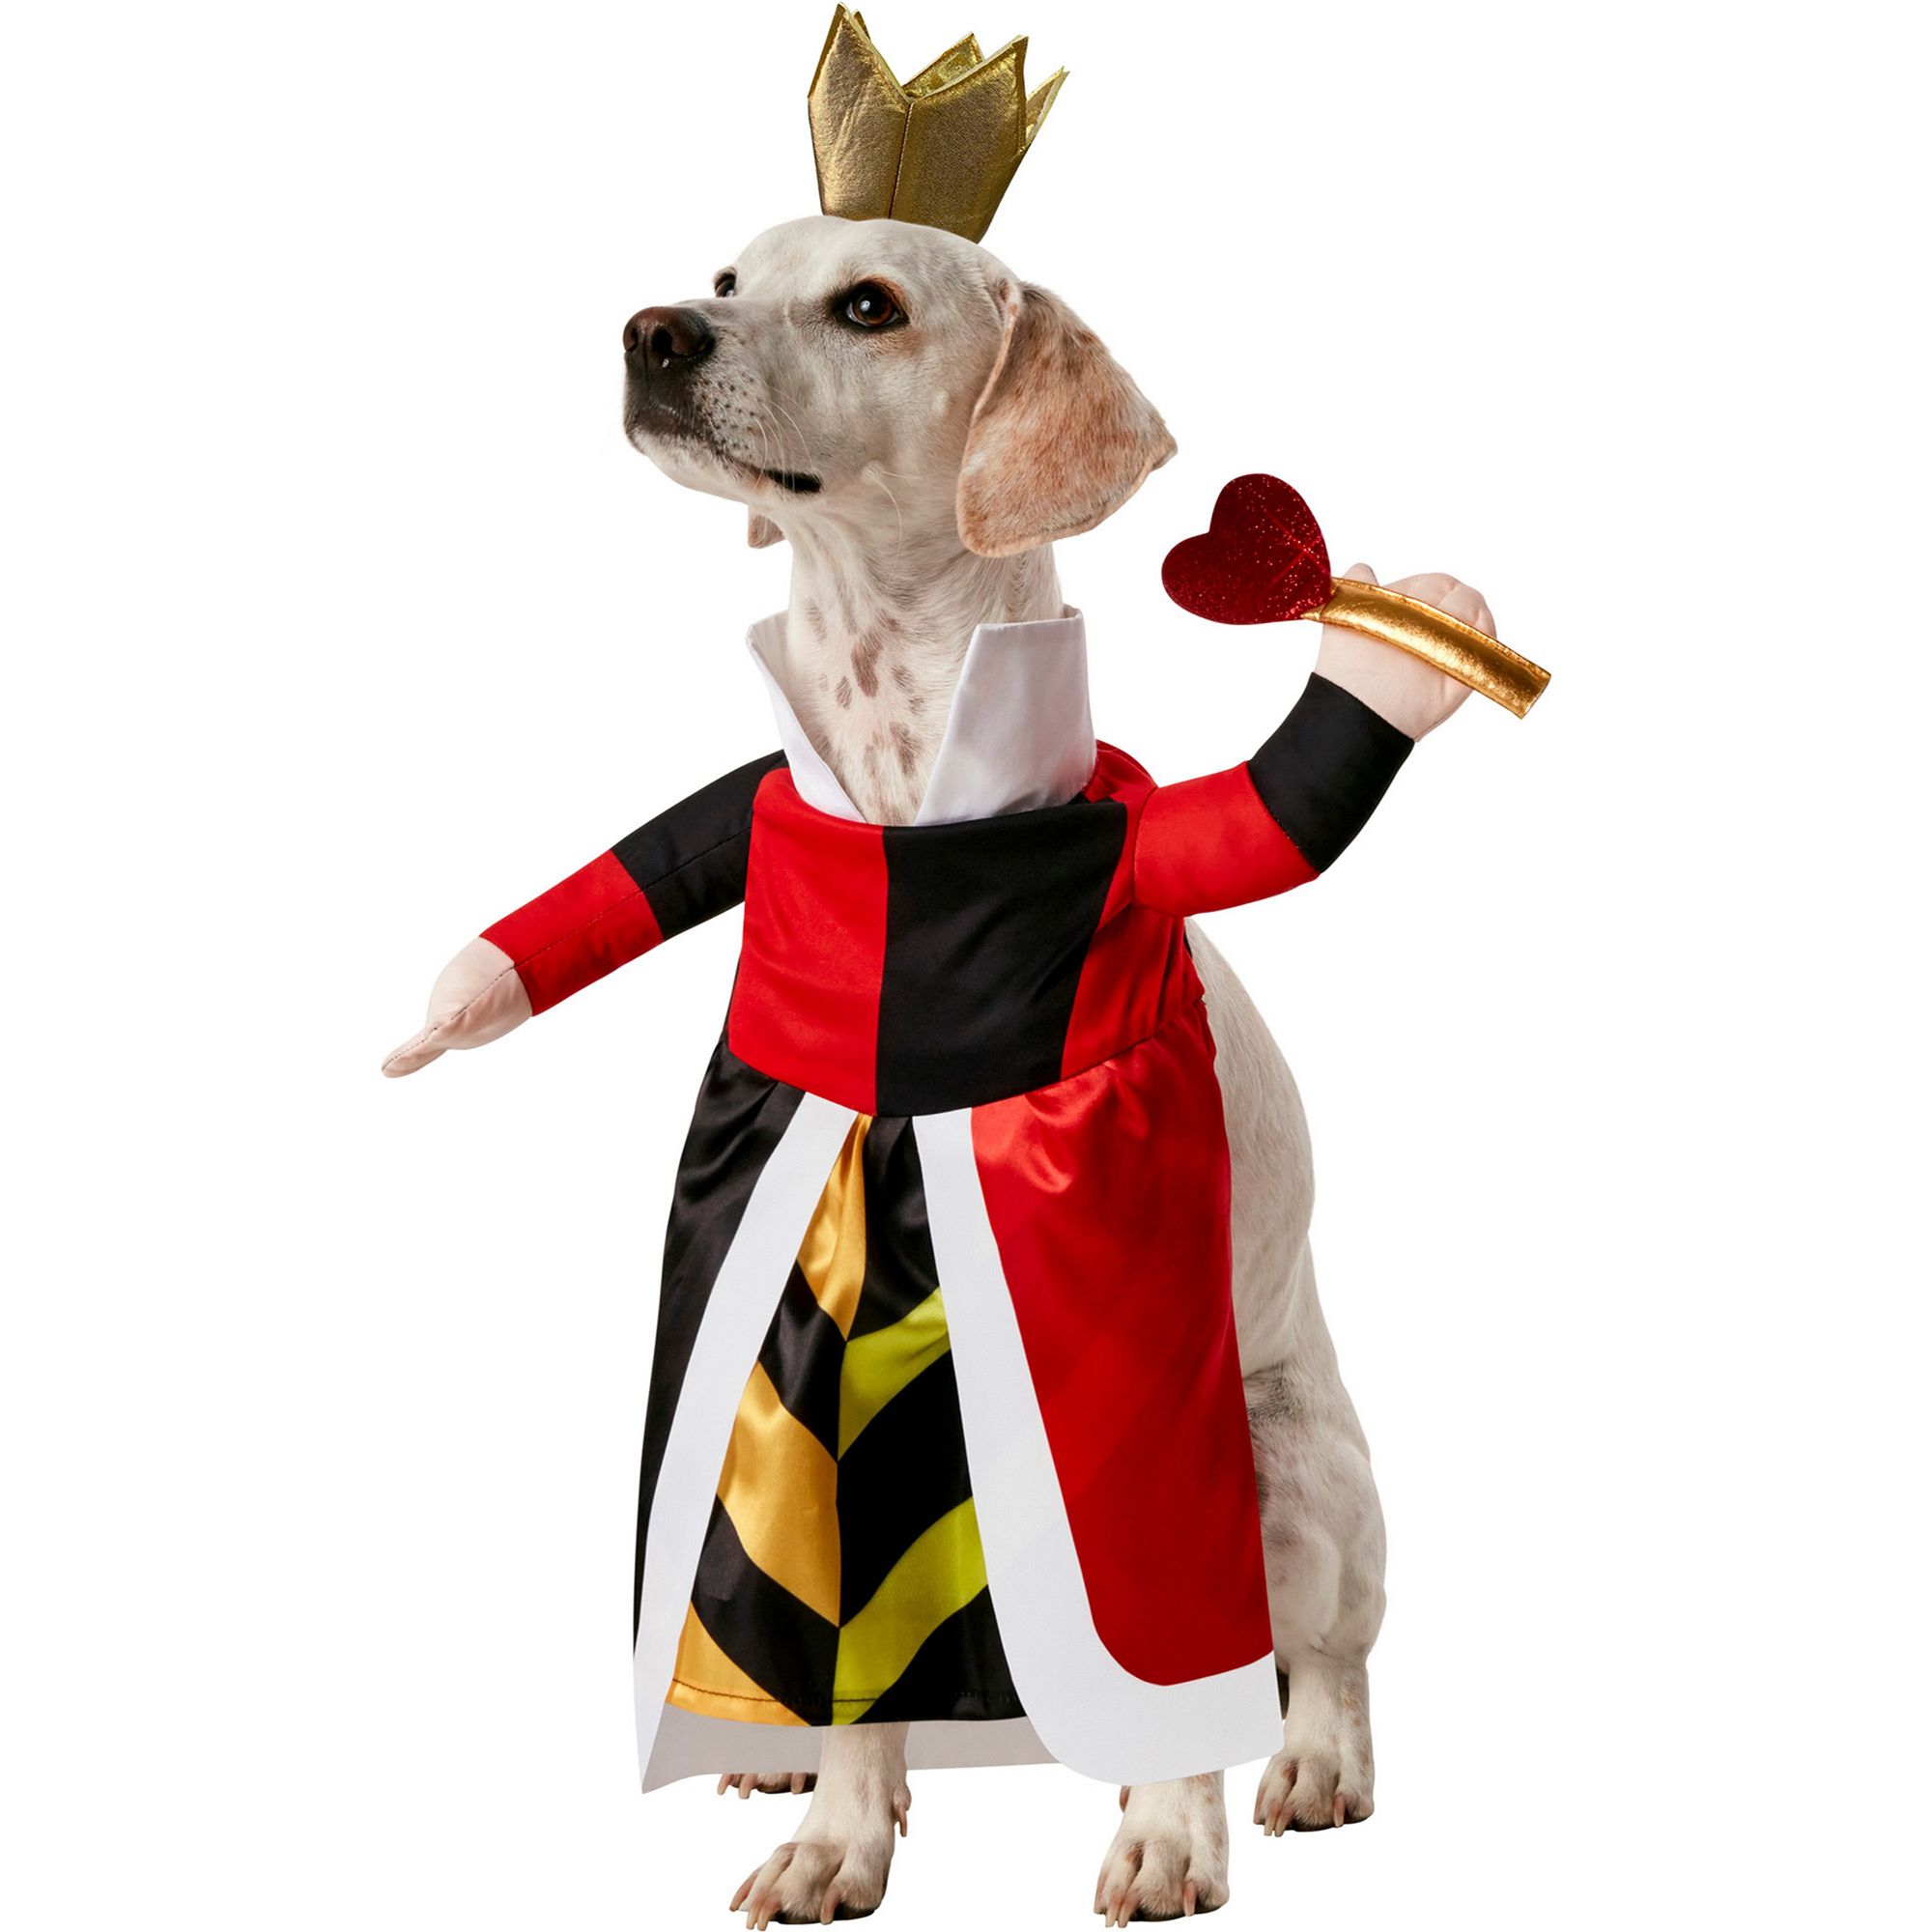 Dog Costumes - Disney, Superheroes, Classic Movies & More